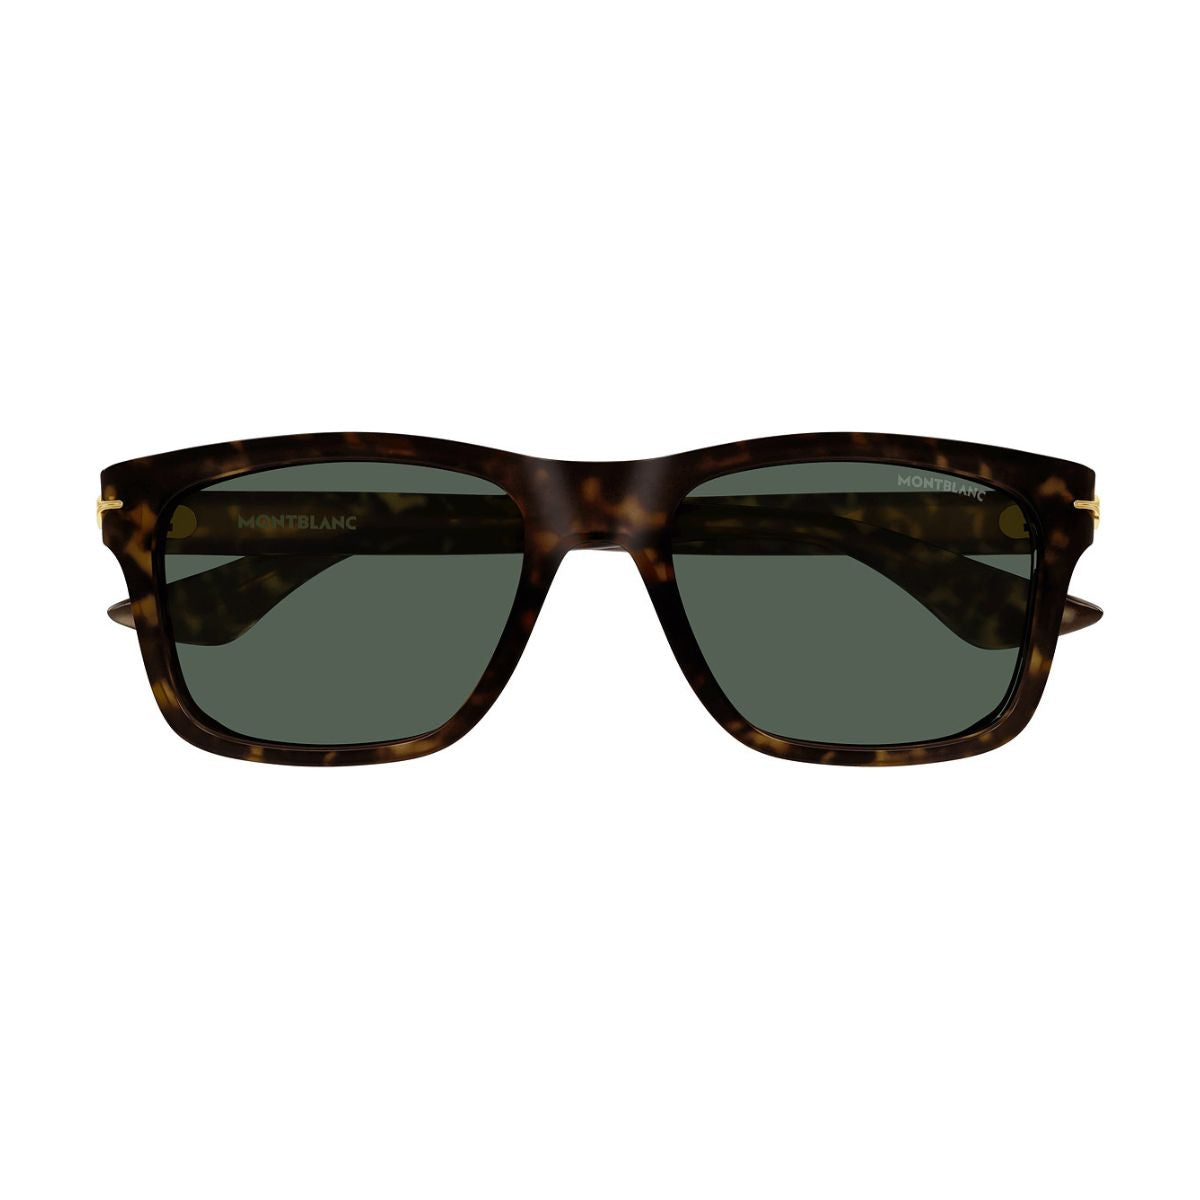 "Montblanc 0263/S 002: Black Havana Square Sunglasses for Men at Optorium. Stylish, full-rim sunglasses with green polycarbonate lenses for UV protection. Shop now at Optorium!"